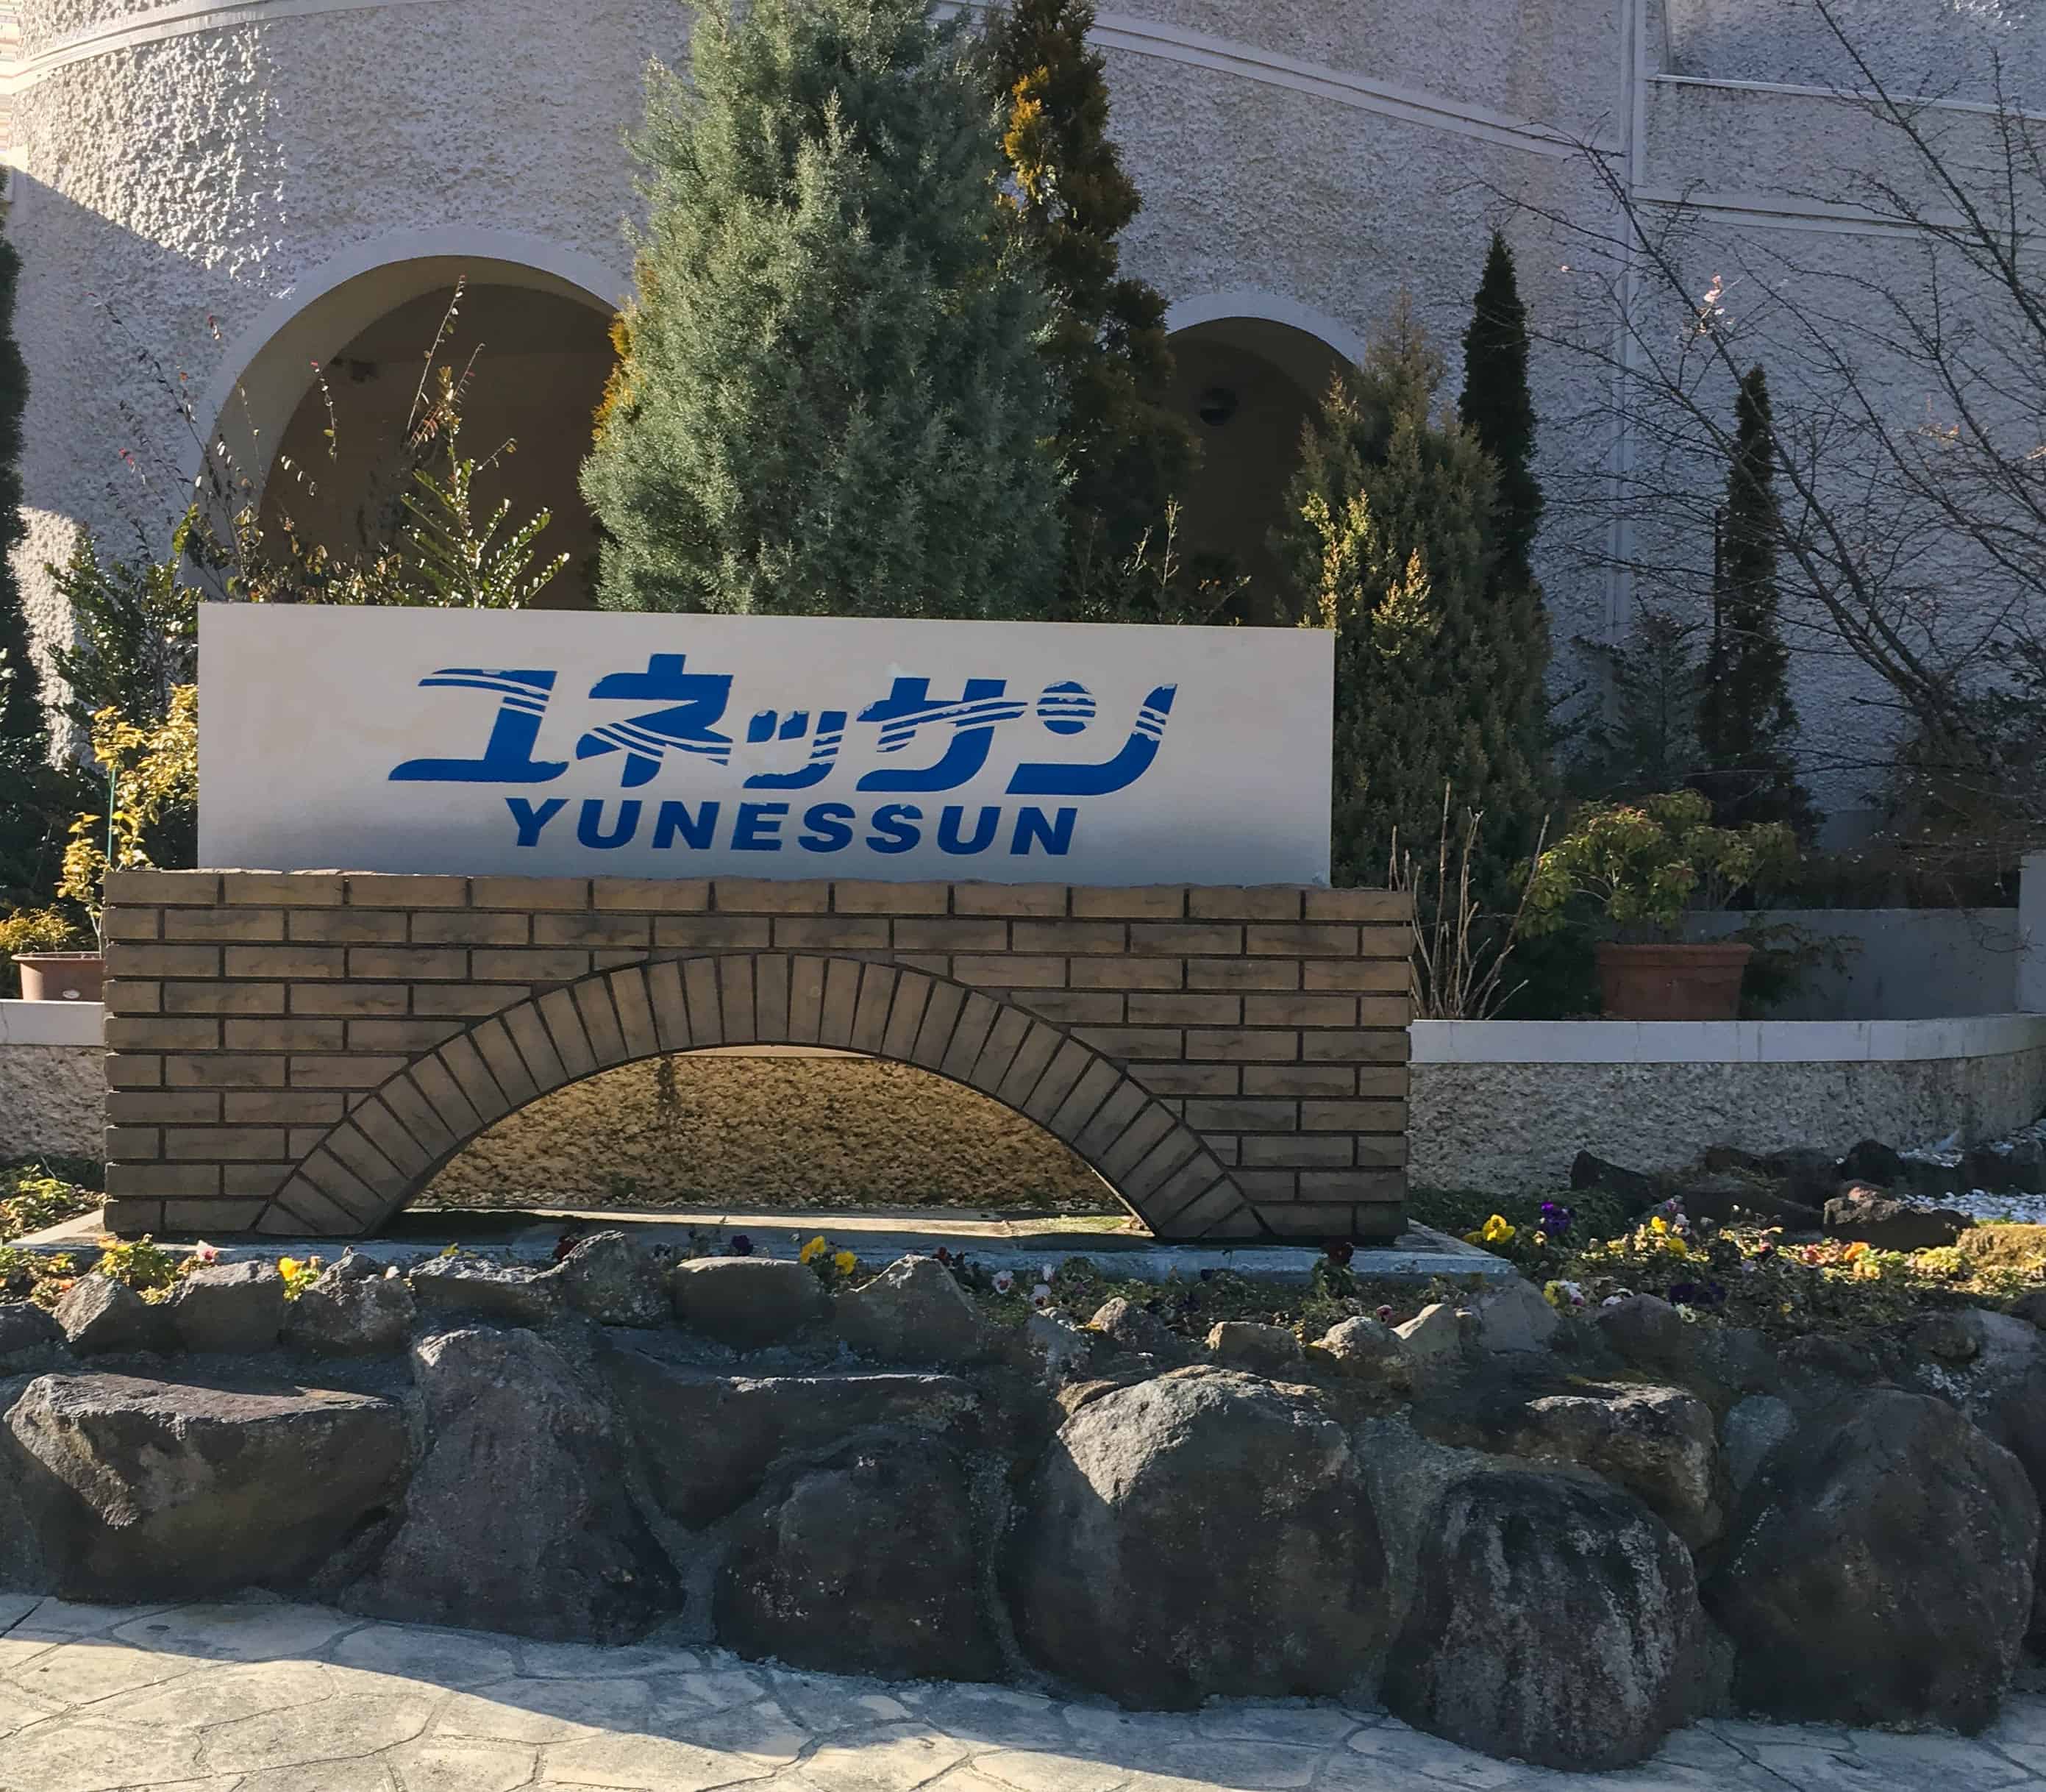 Outside Yunessun Spa